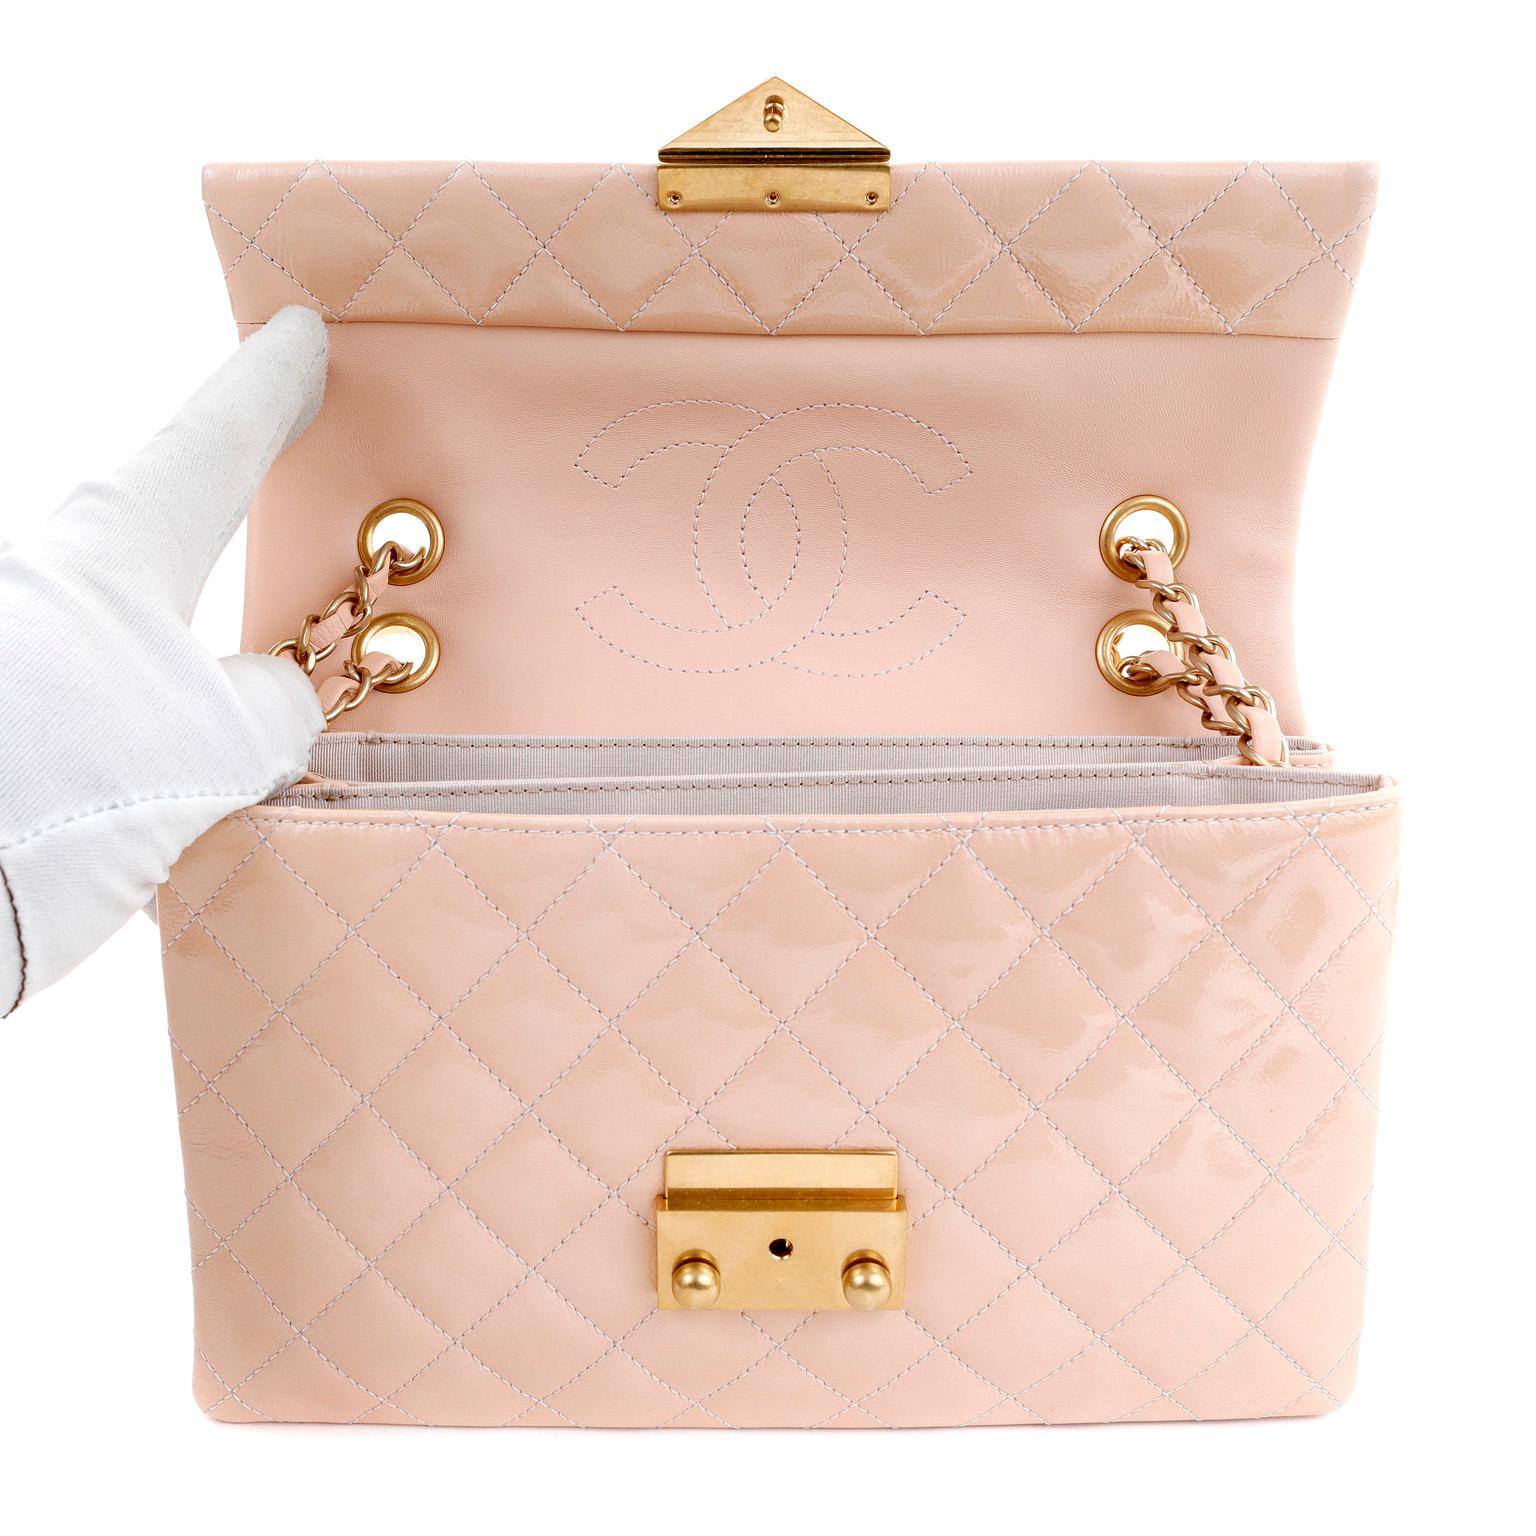 Chanel Beige Patent Leather Envelope Flap Bag  2